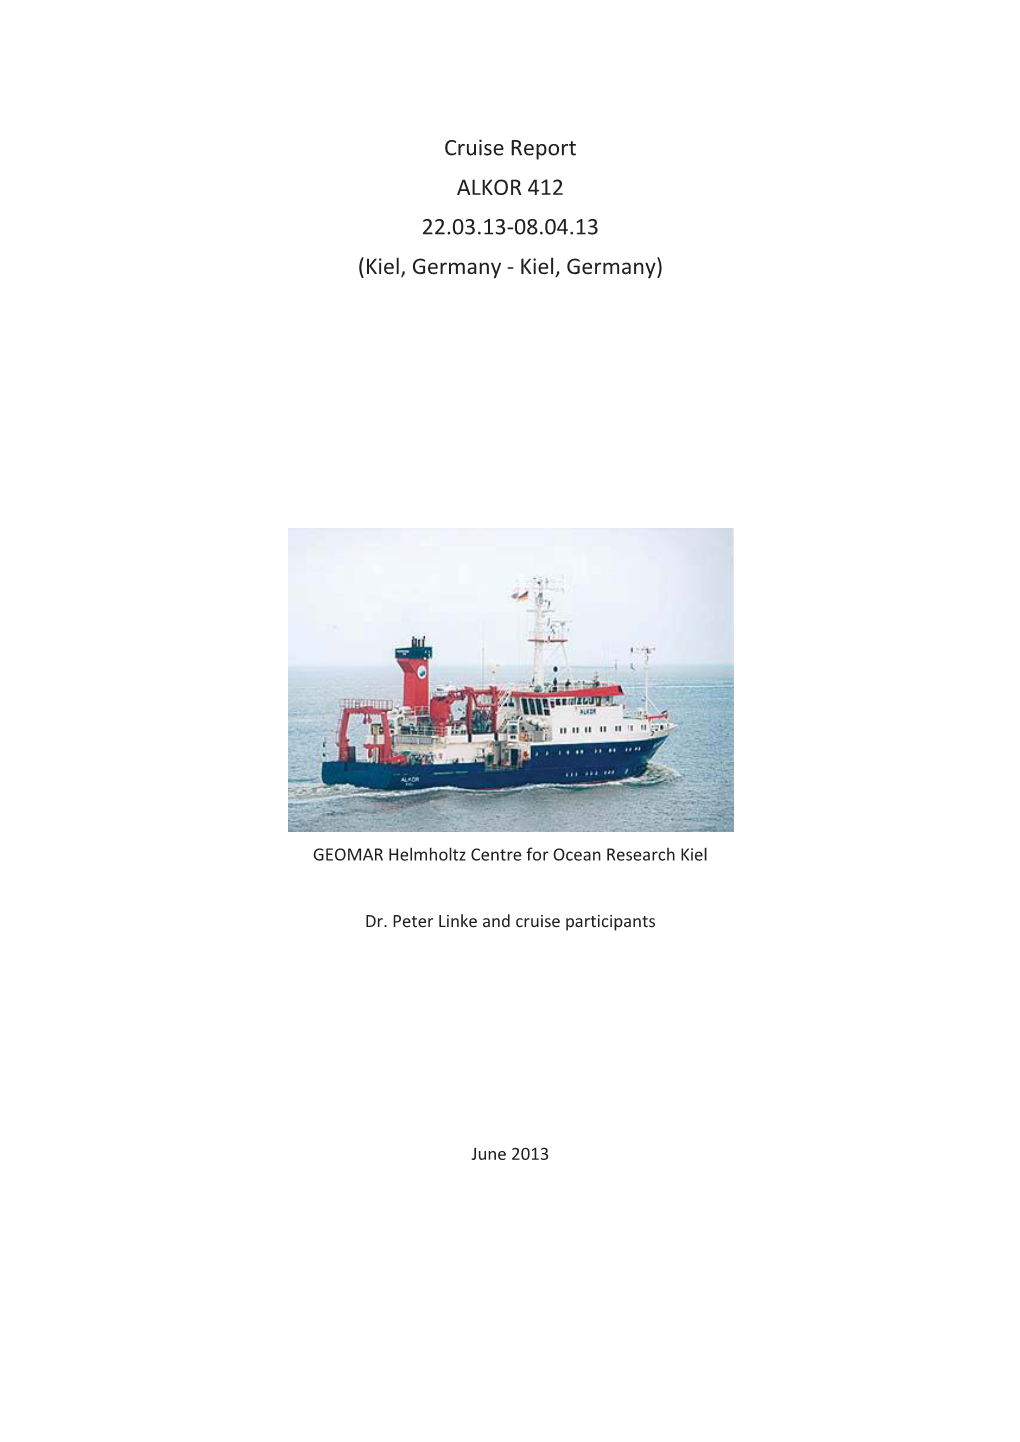 Cruise Report ALKOR 412 22.03.13-08.04.13 (Kiel, Germany - Kiel, Germany)